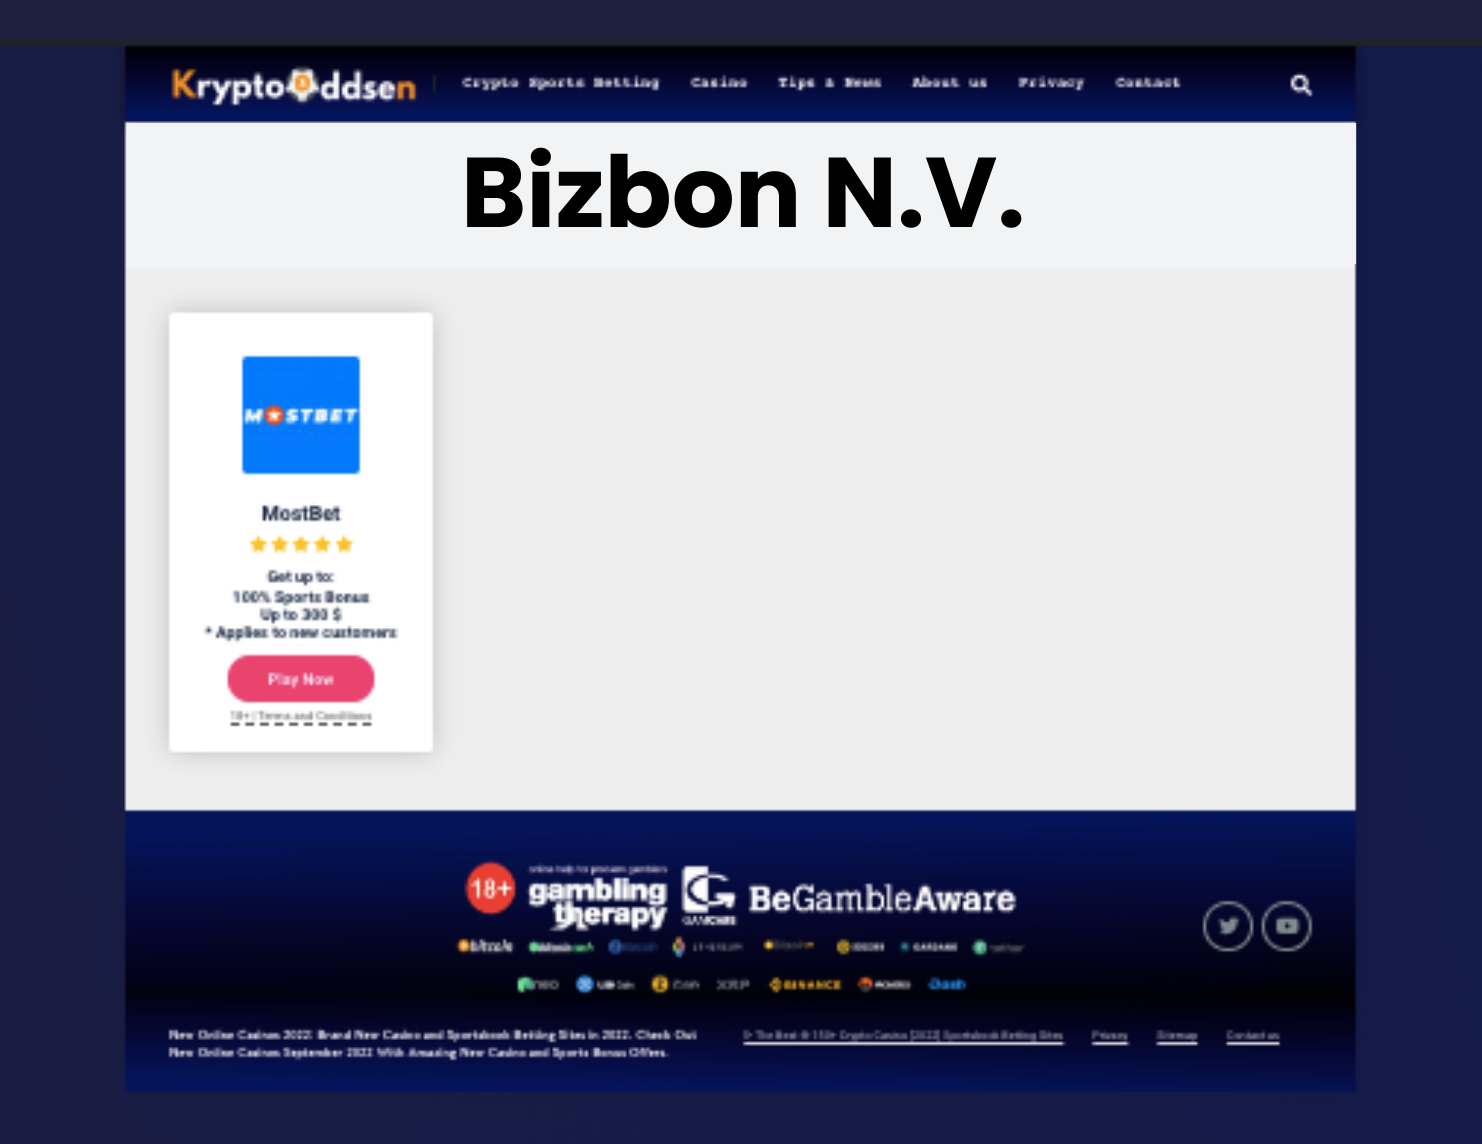 Bizbon N.V. Casino Owned Operated